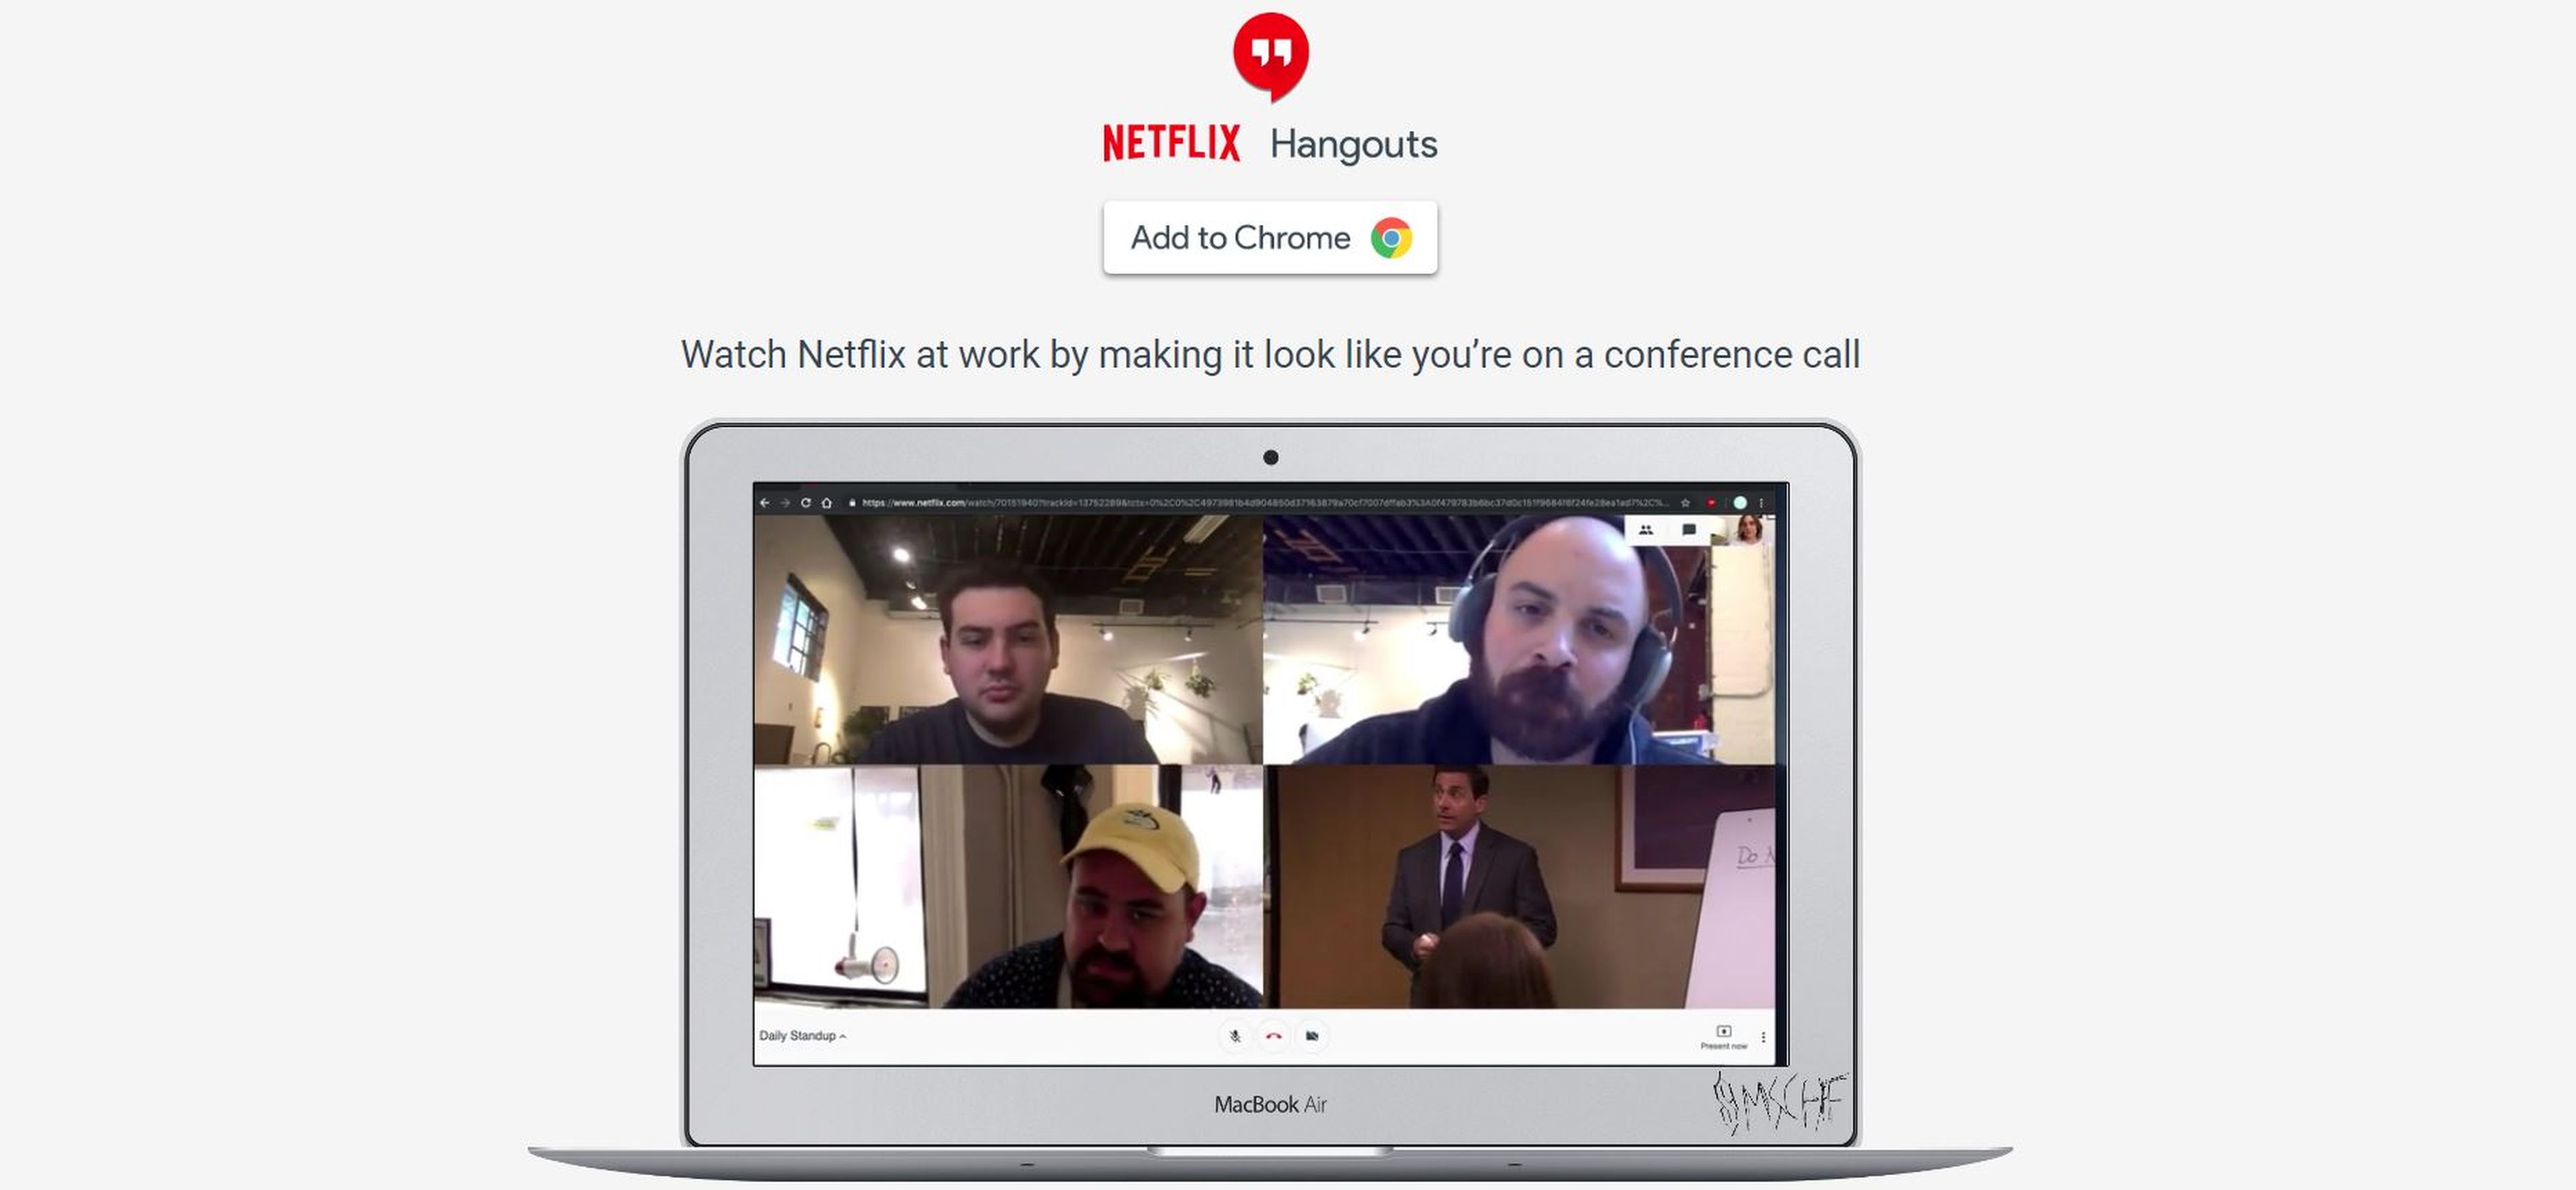 Un pantallazo del aspecto de la extensión Netflix Hangouts para Chrome, con un capítulo de The Office.